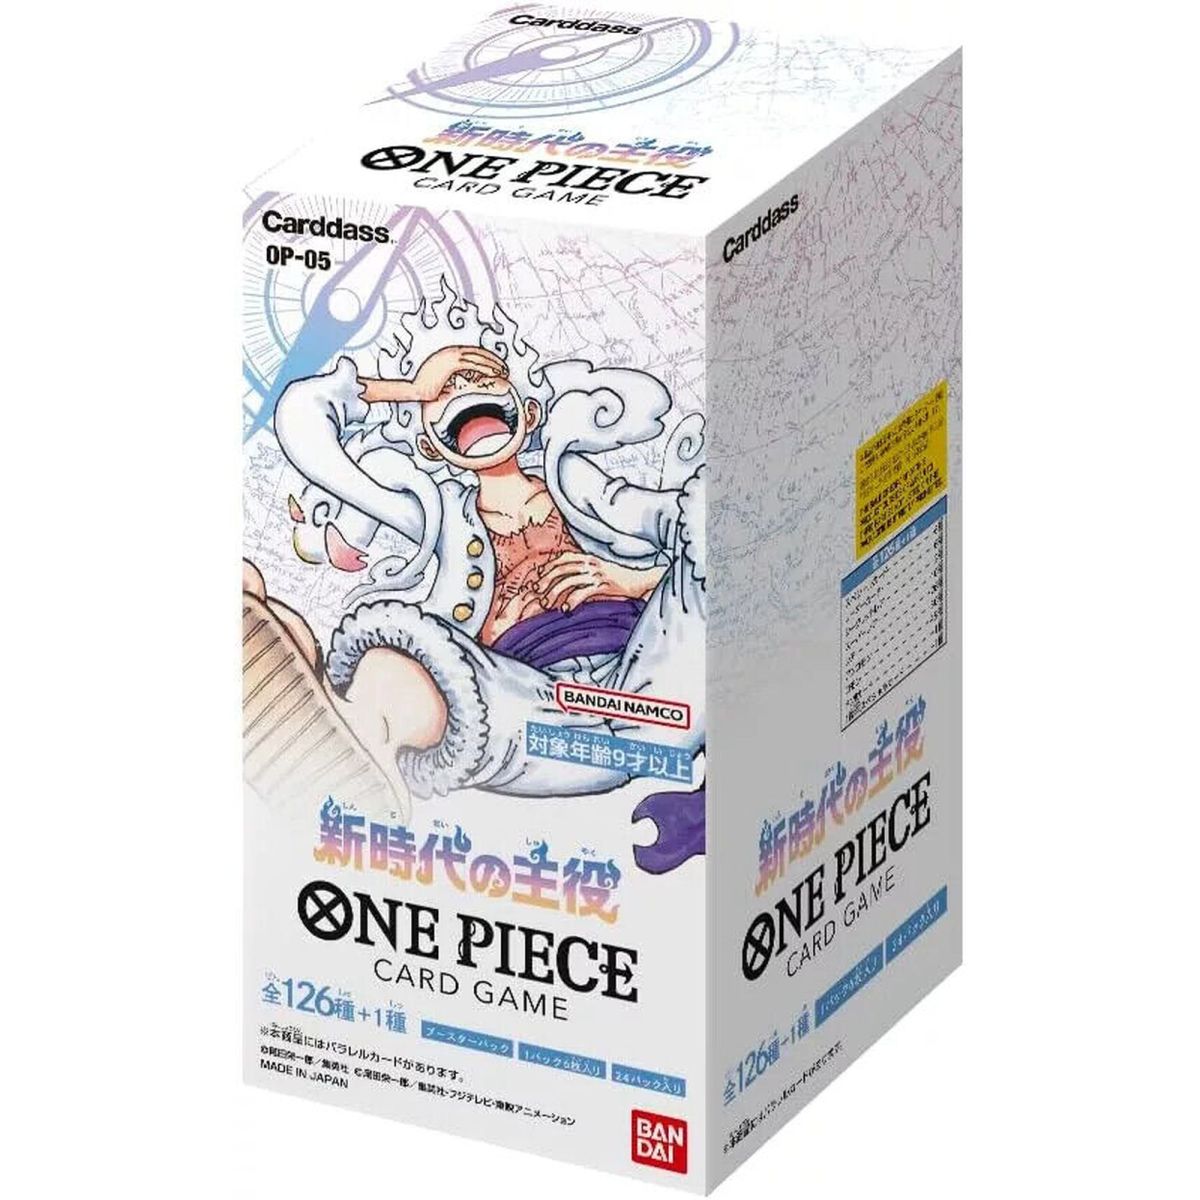 Alternative Rare! Dernière ouverture de boite One Piece card Game ! Romance  Dawn Booster Box Opening 